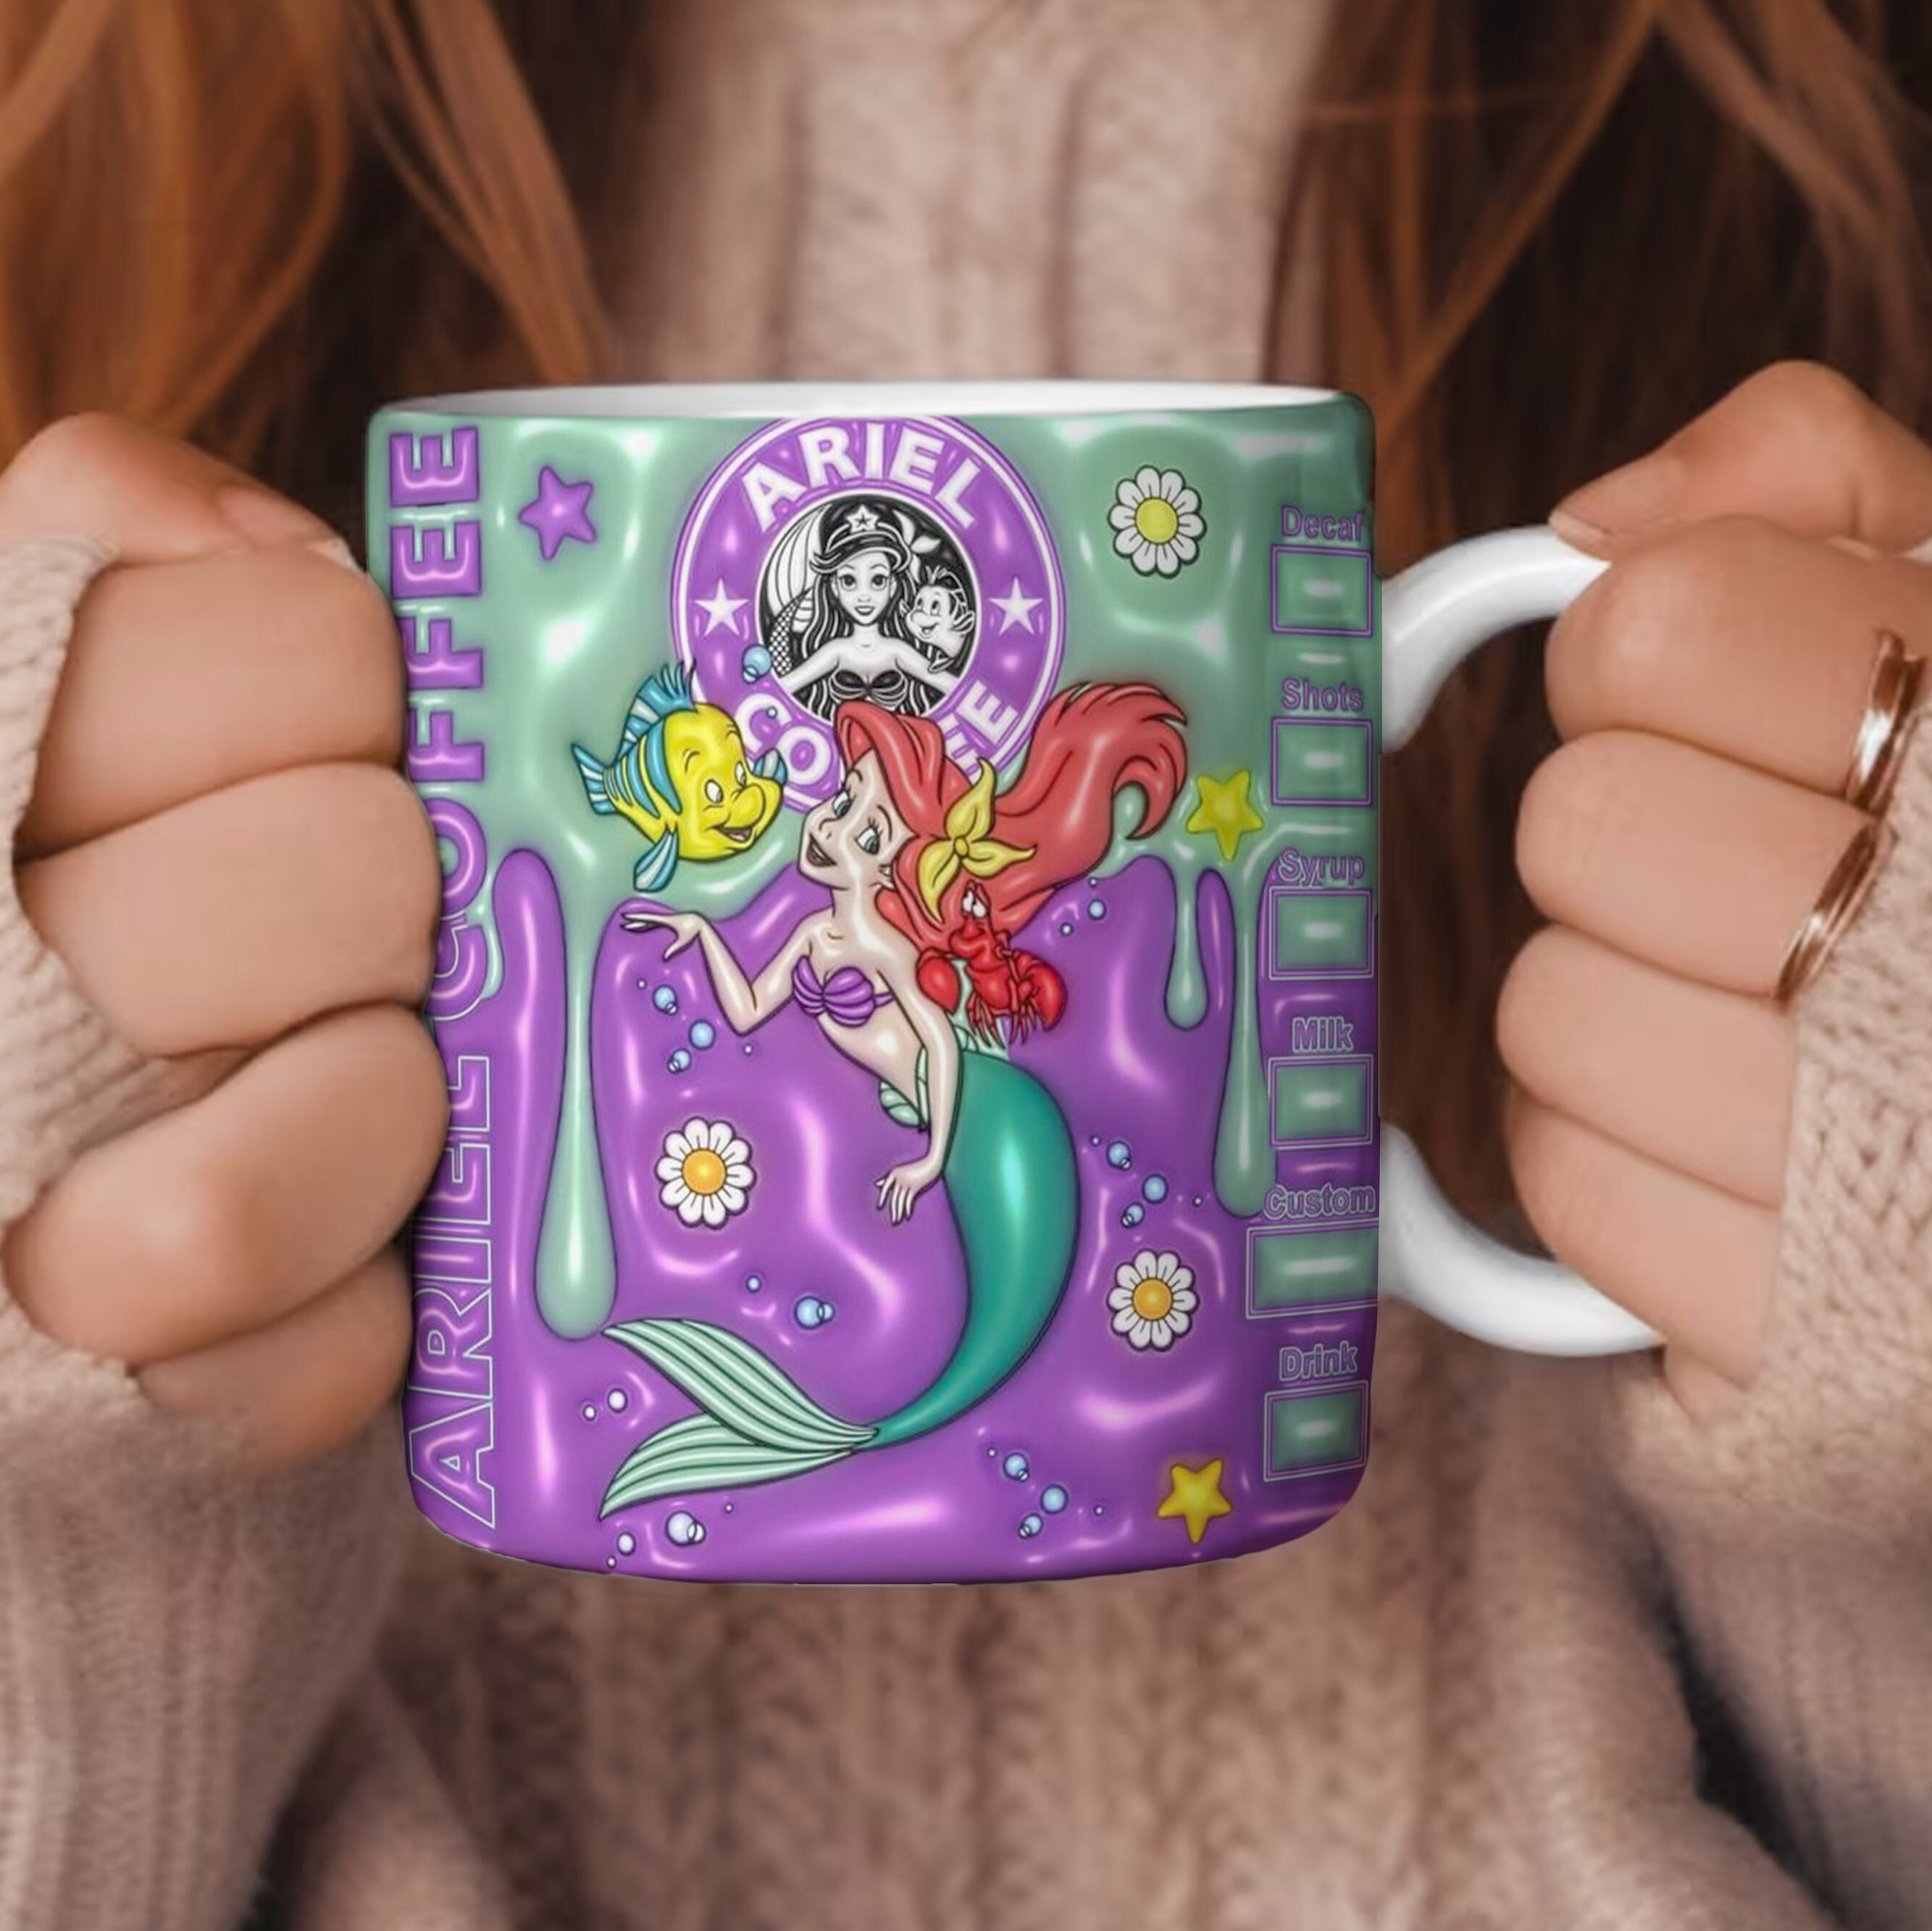 Disney The Little Mermaid 'Dreaming Ariel' Big Coffee Mug Cup 24oz - P –  Pit-a-Pats.com